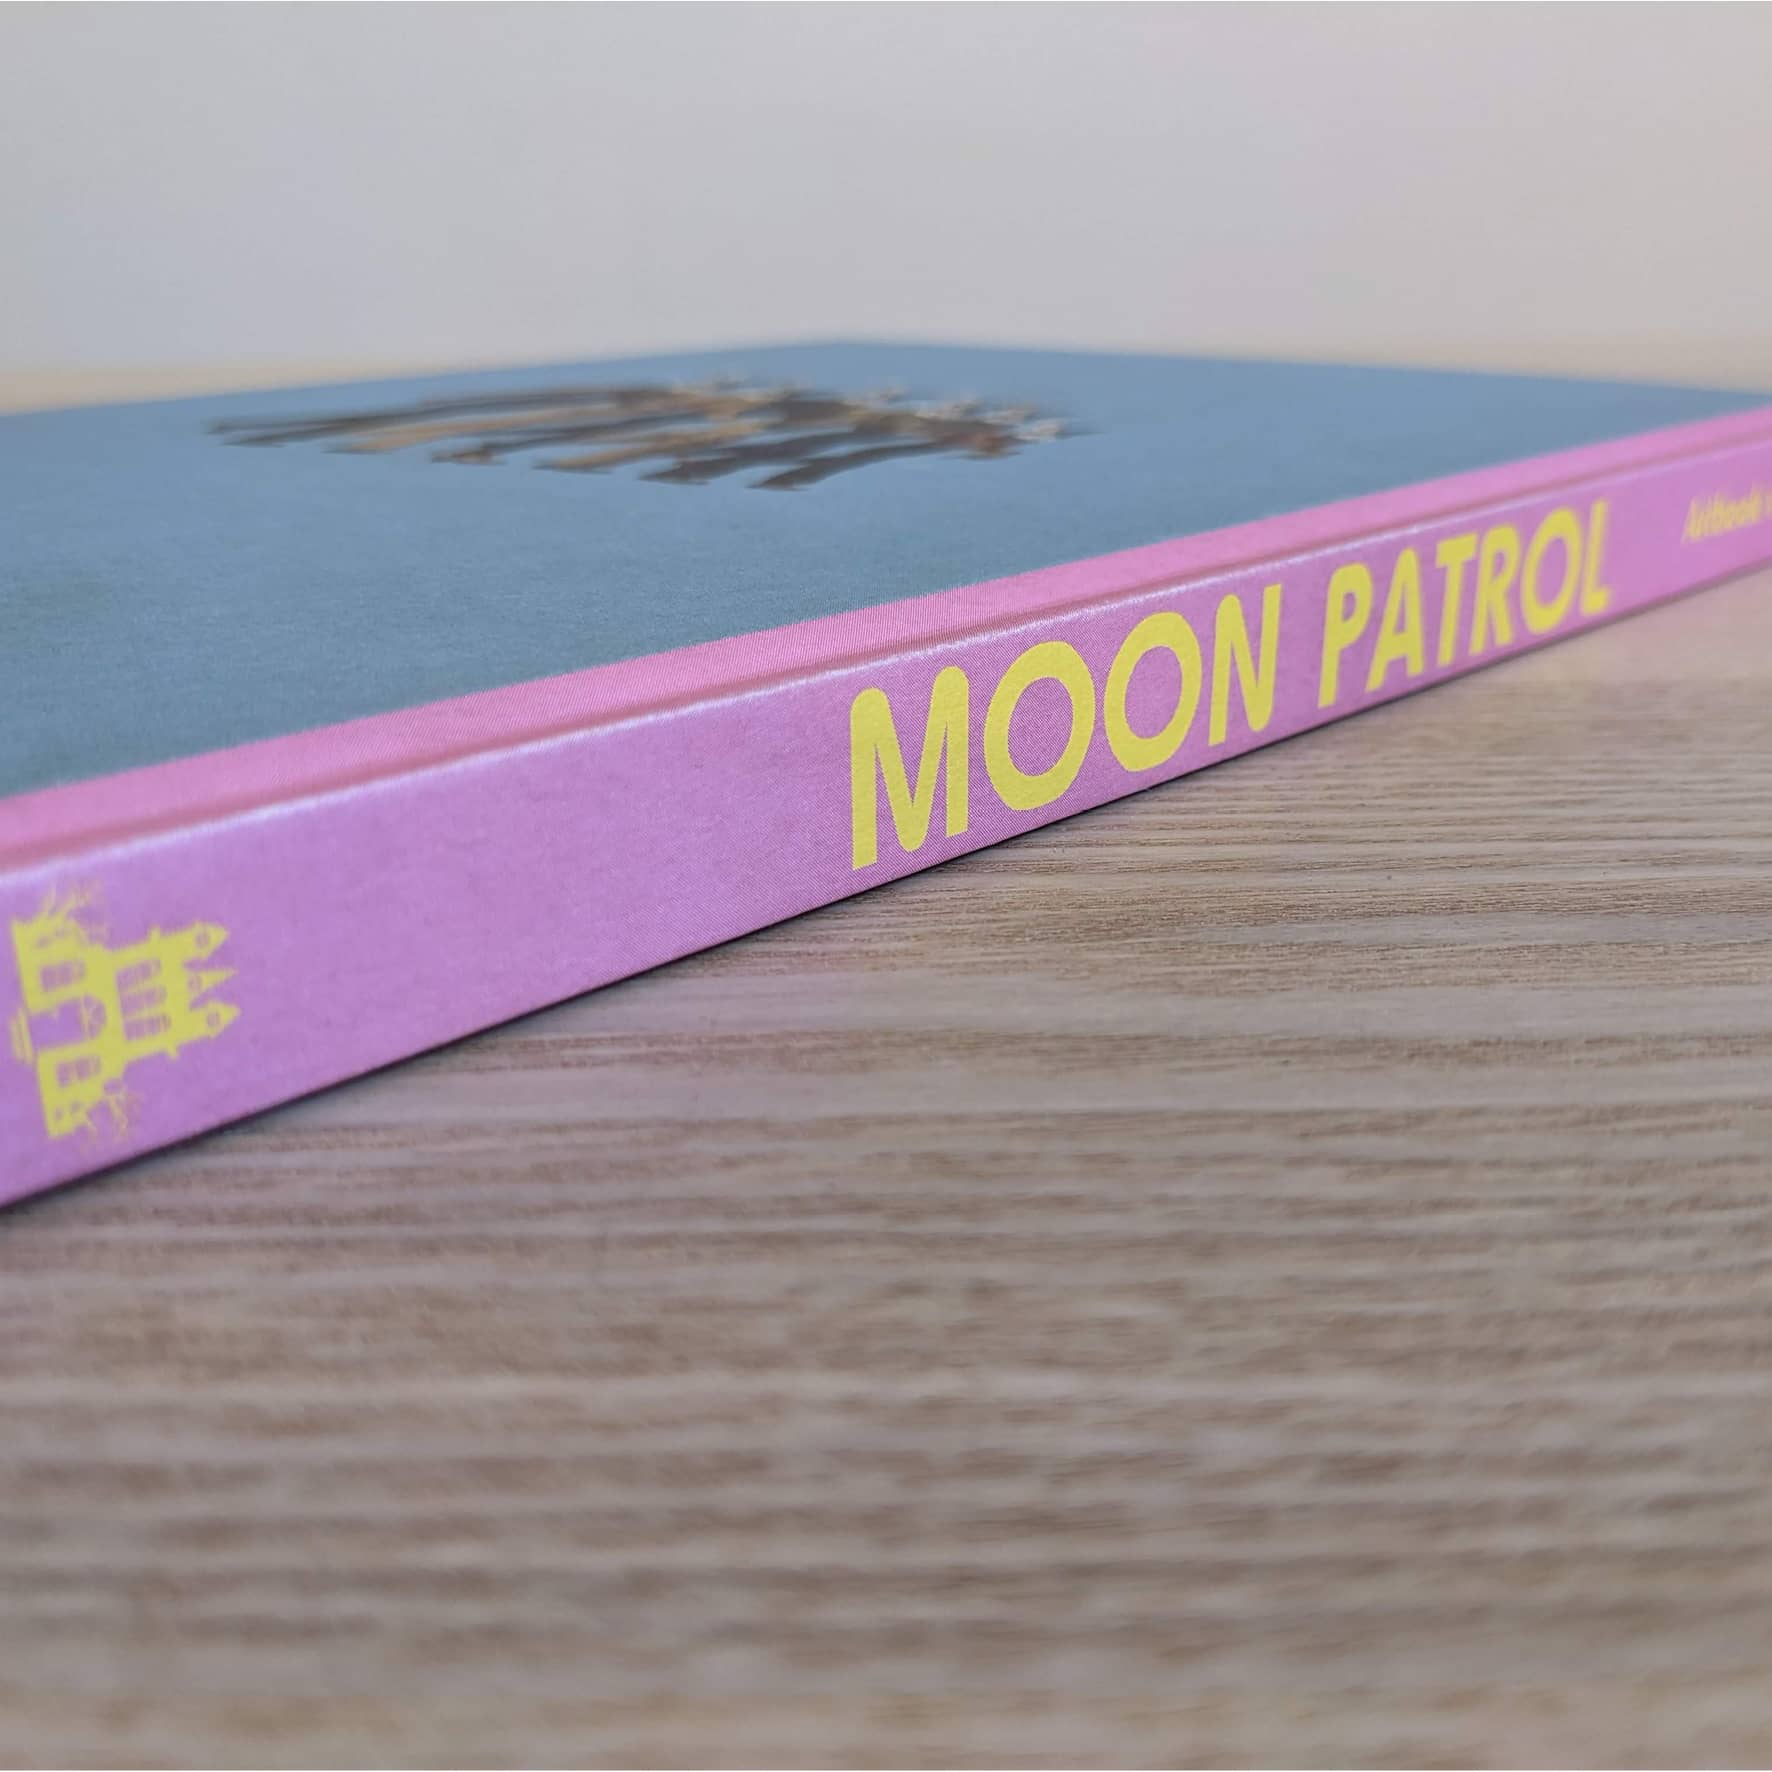 Moon Patrol - Artbook Volume 1